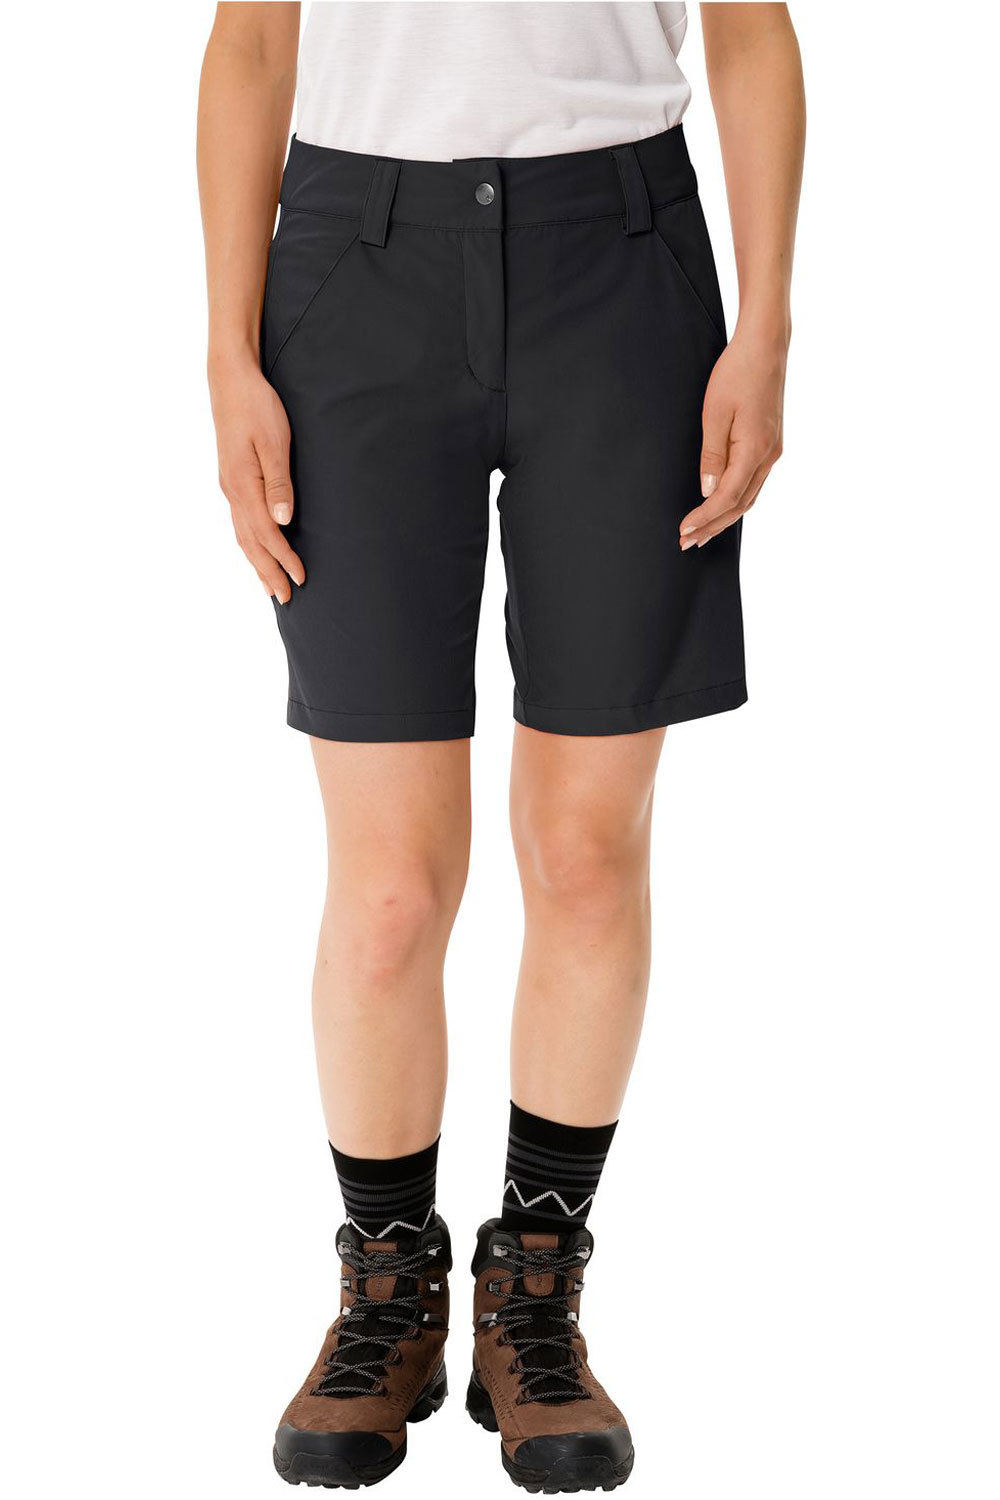 Vaude pantalón corto montaña mujer Women's Neyland Shorts vista frontal